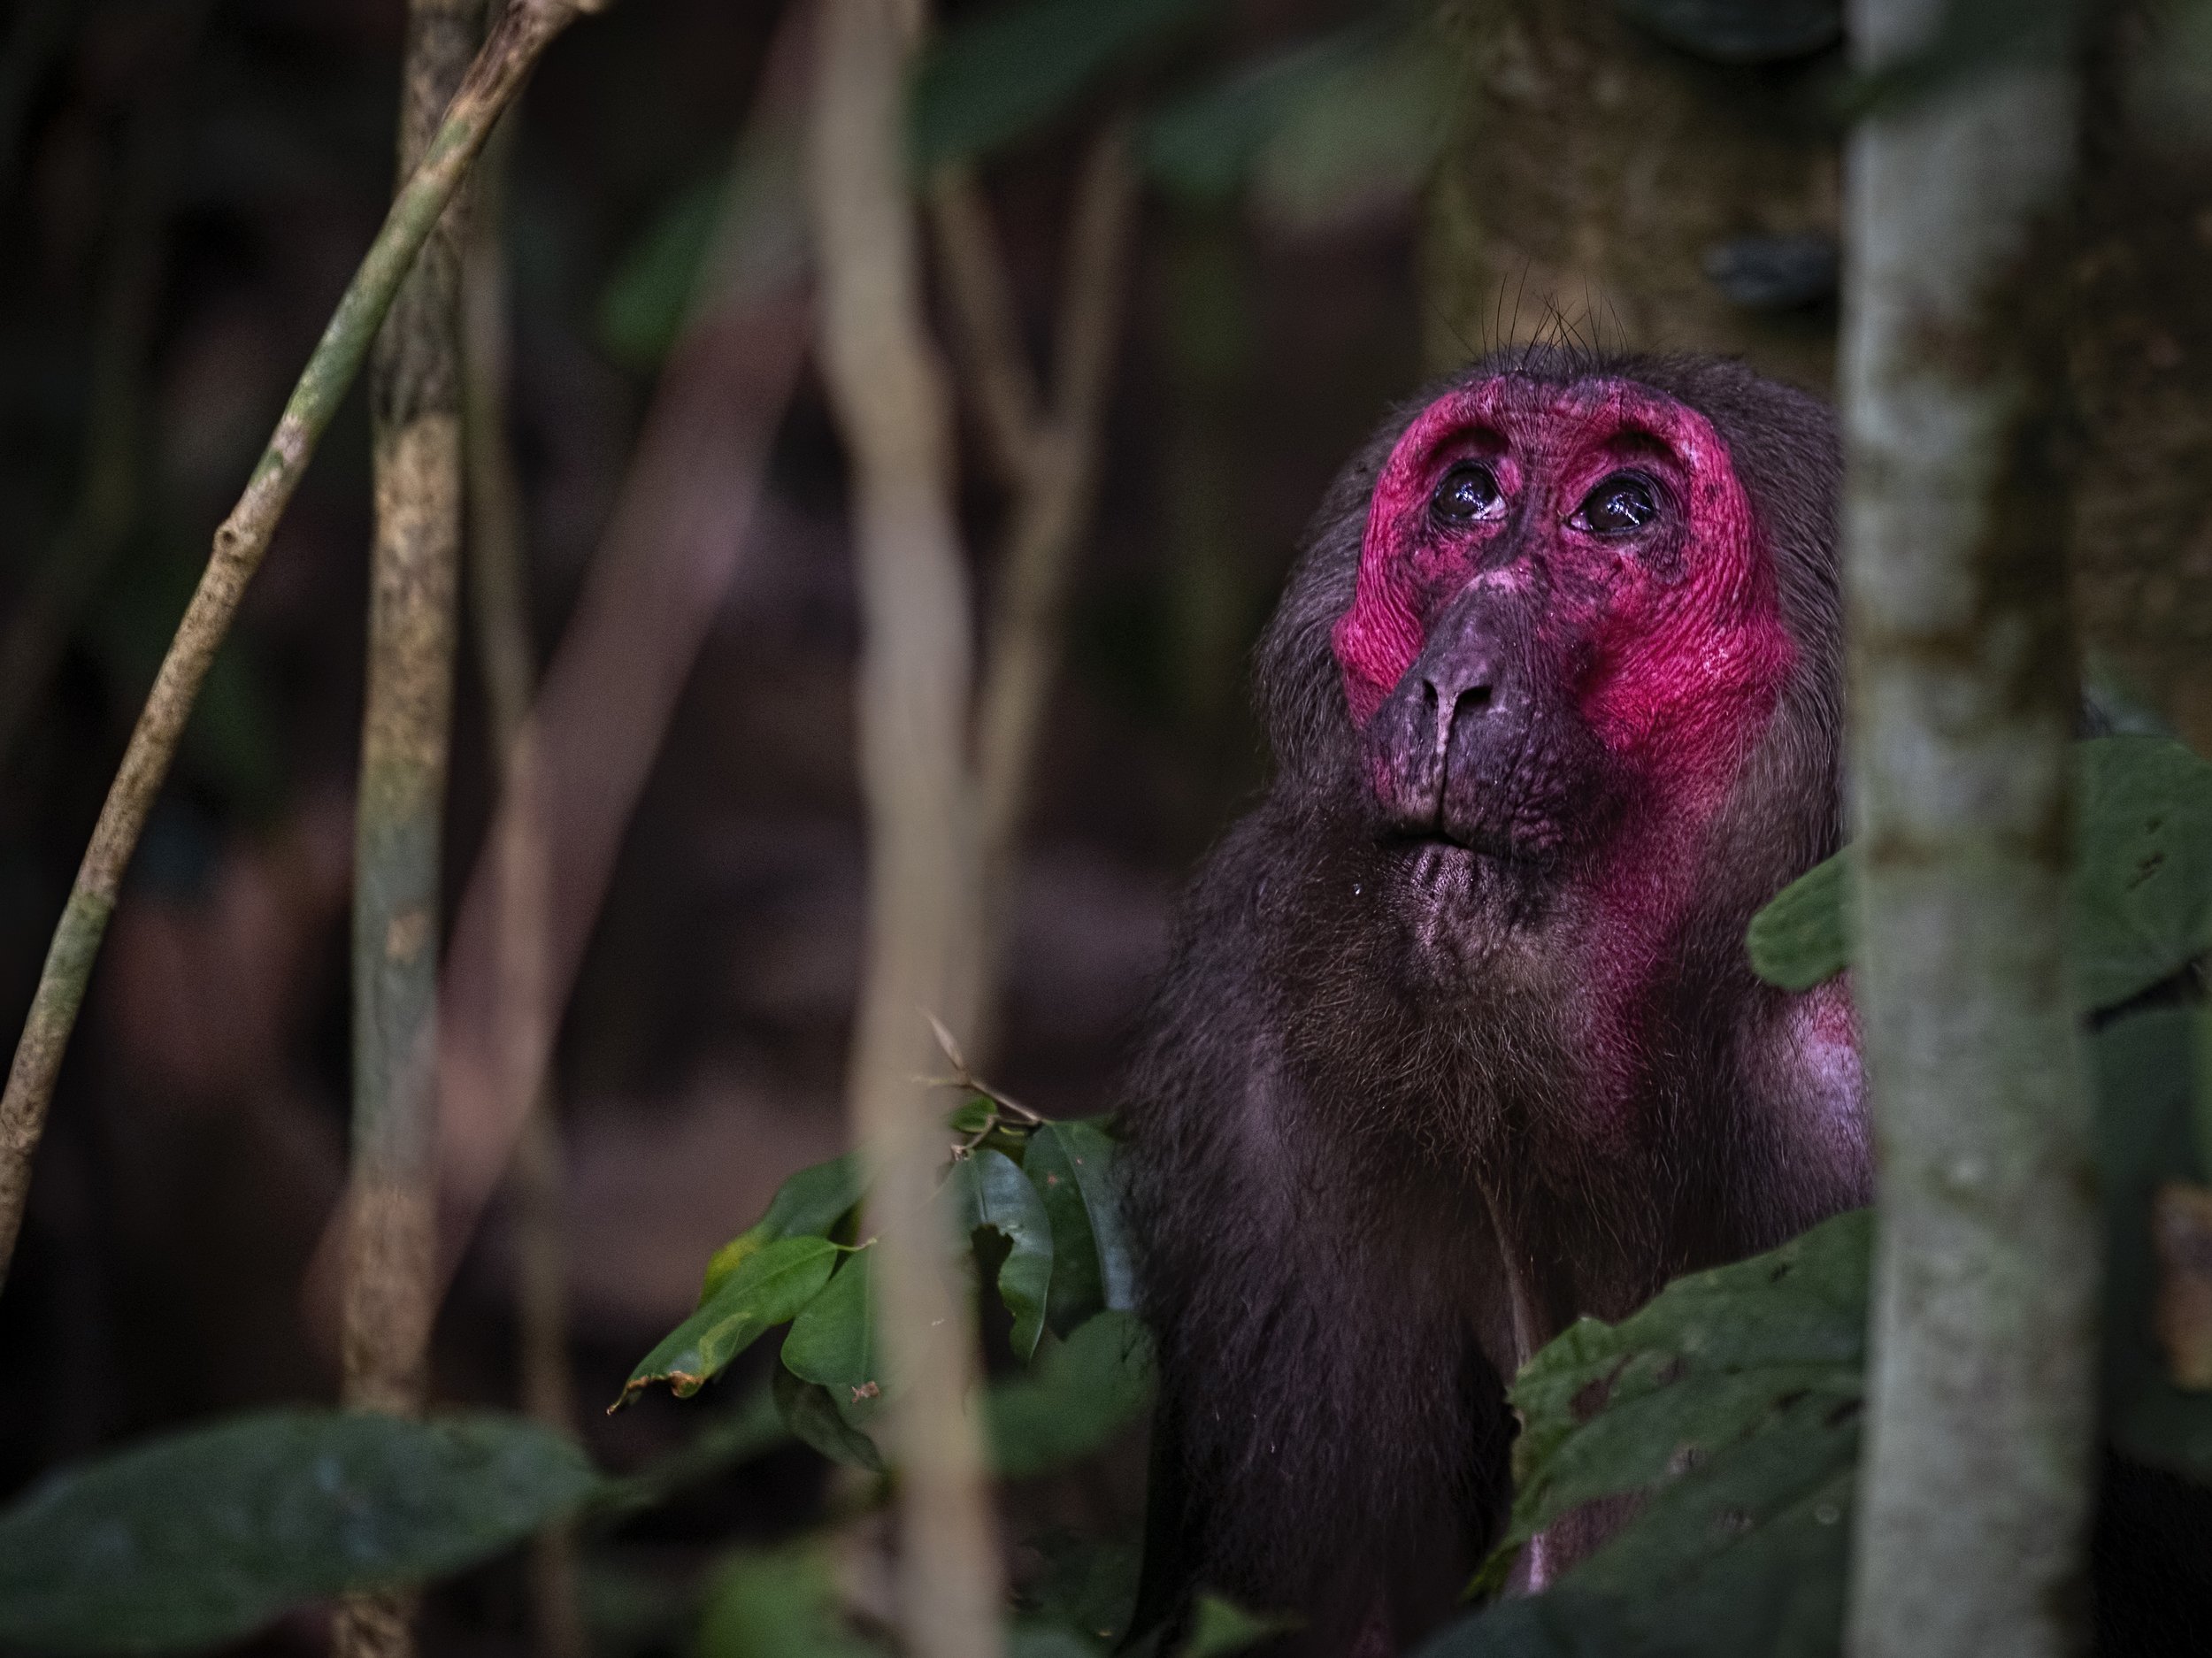 Stump-tailed Macaque, monkey, Hoollongapar Gibbon Sanctuary, Arpan Saha